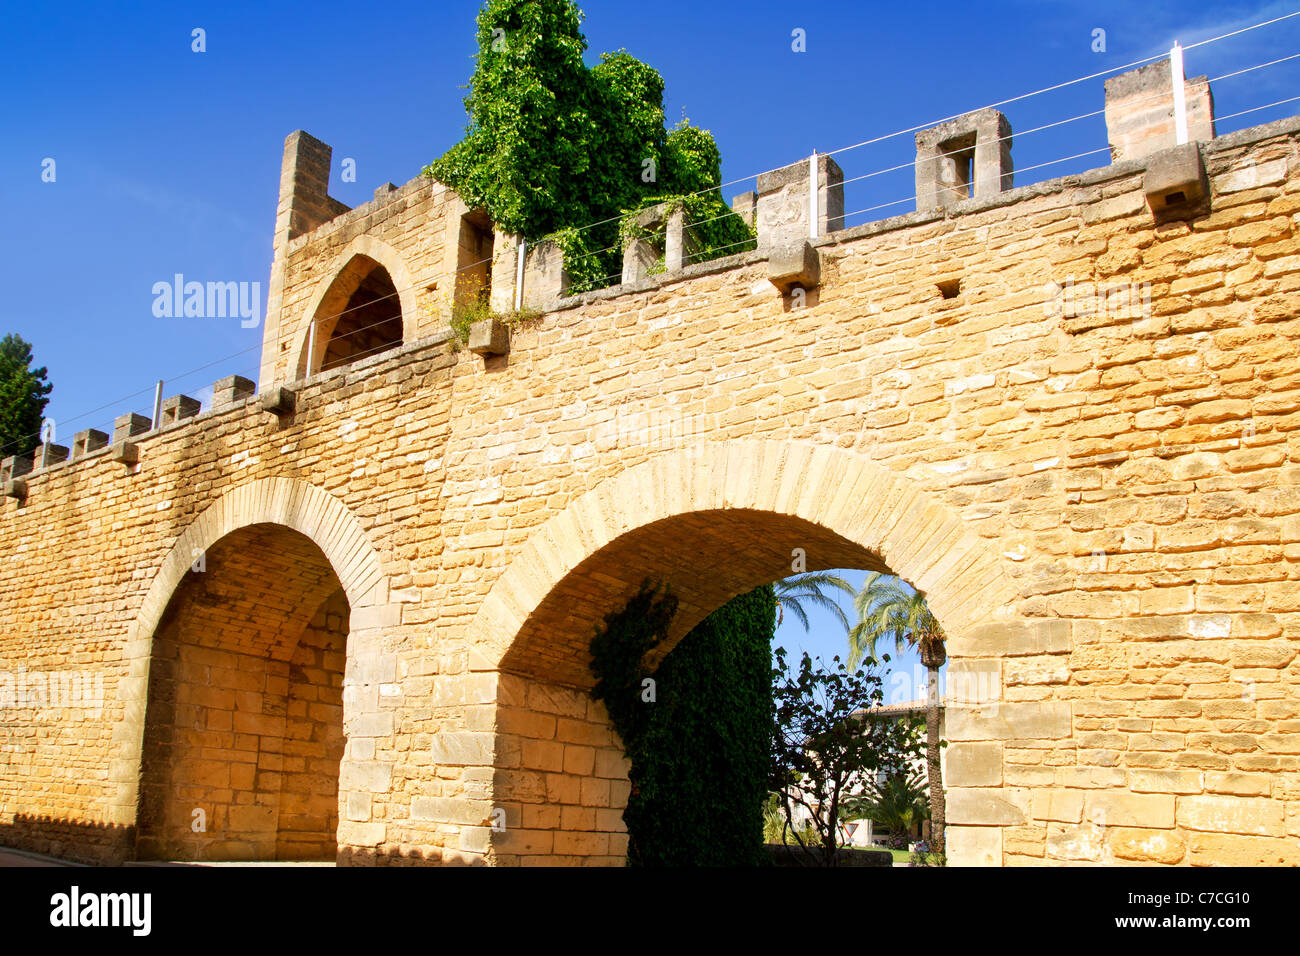 Alcudia puerta de la muralla in north Mallorca roman castle wall door Stock Photo